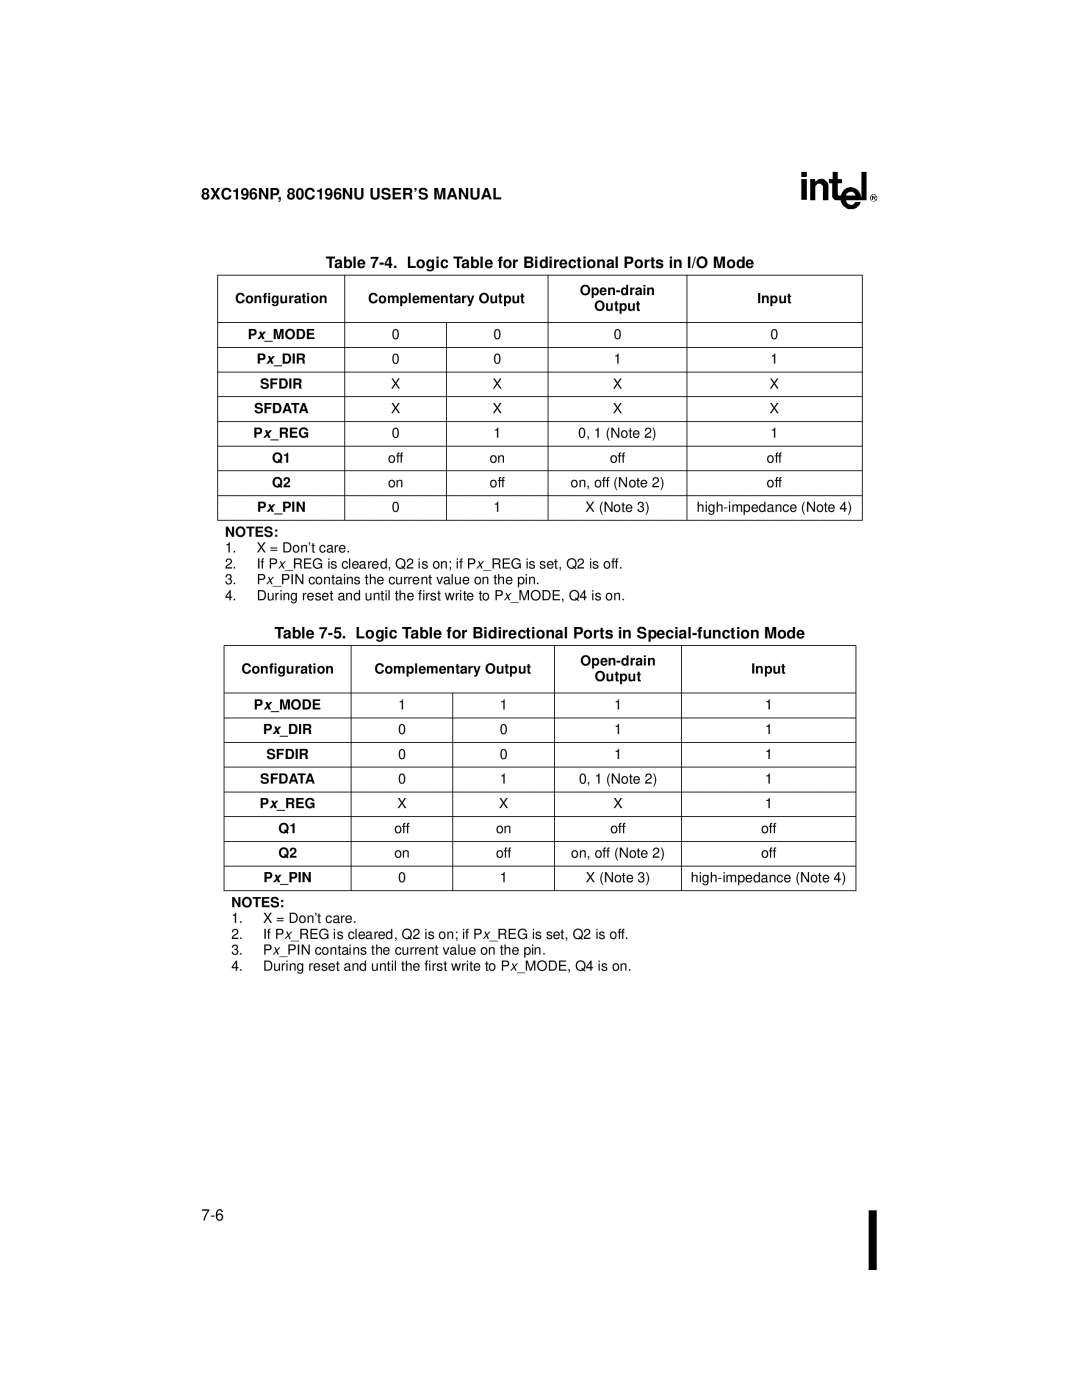 Intel 8XC196NP, 80C196NU, Microcontroller manual Logic Table for Bidirectional Ports in I/O Mode, Sfdir 